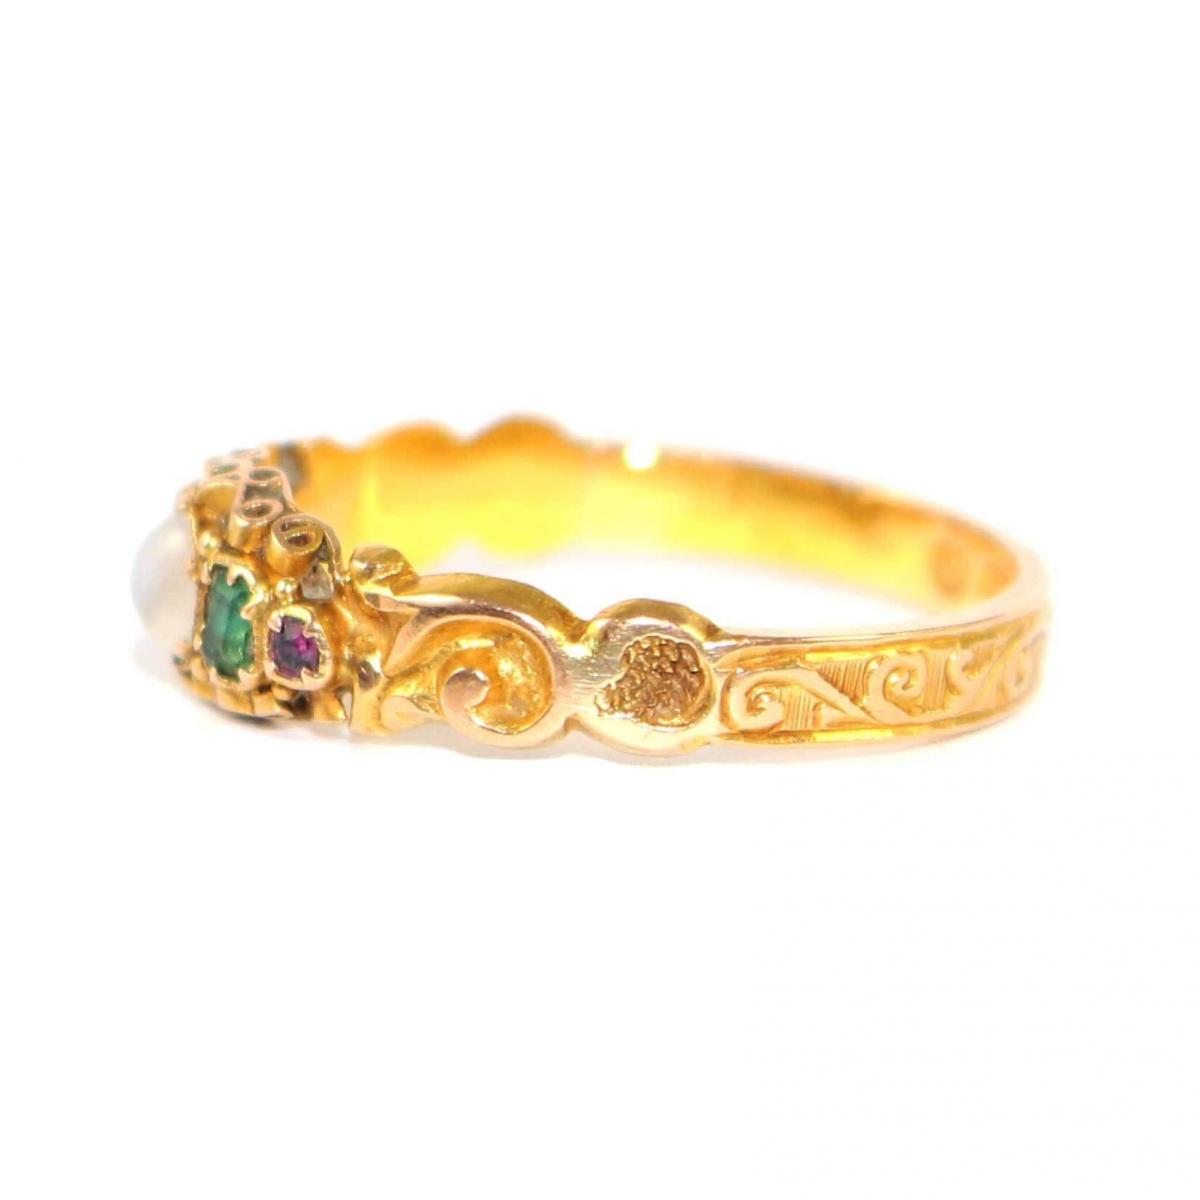 Victorian Moonstone & Emerald Ring c.1865